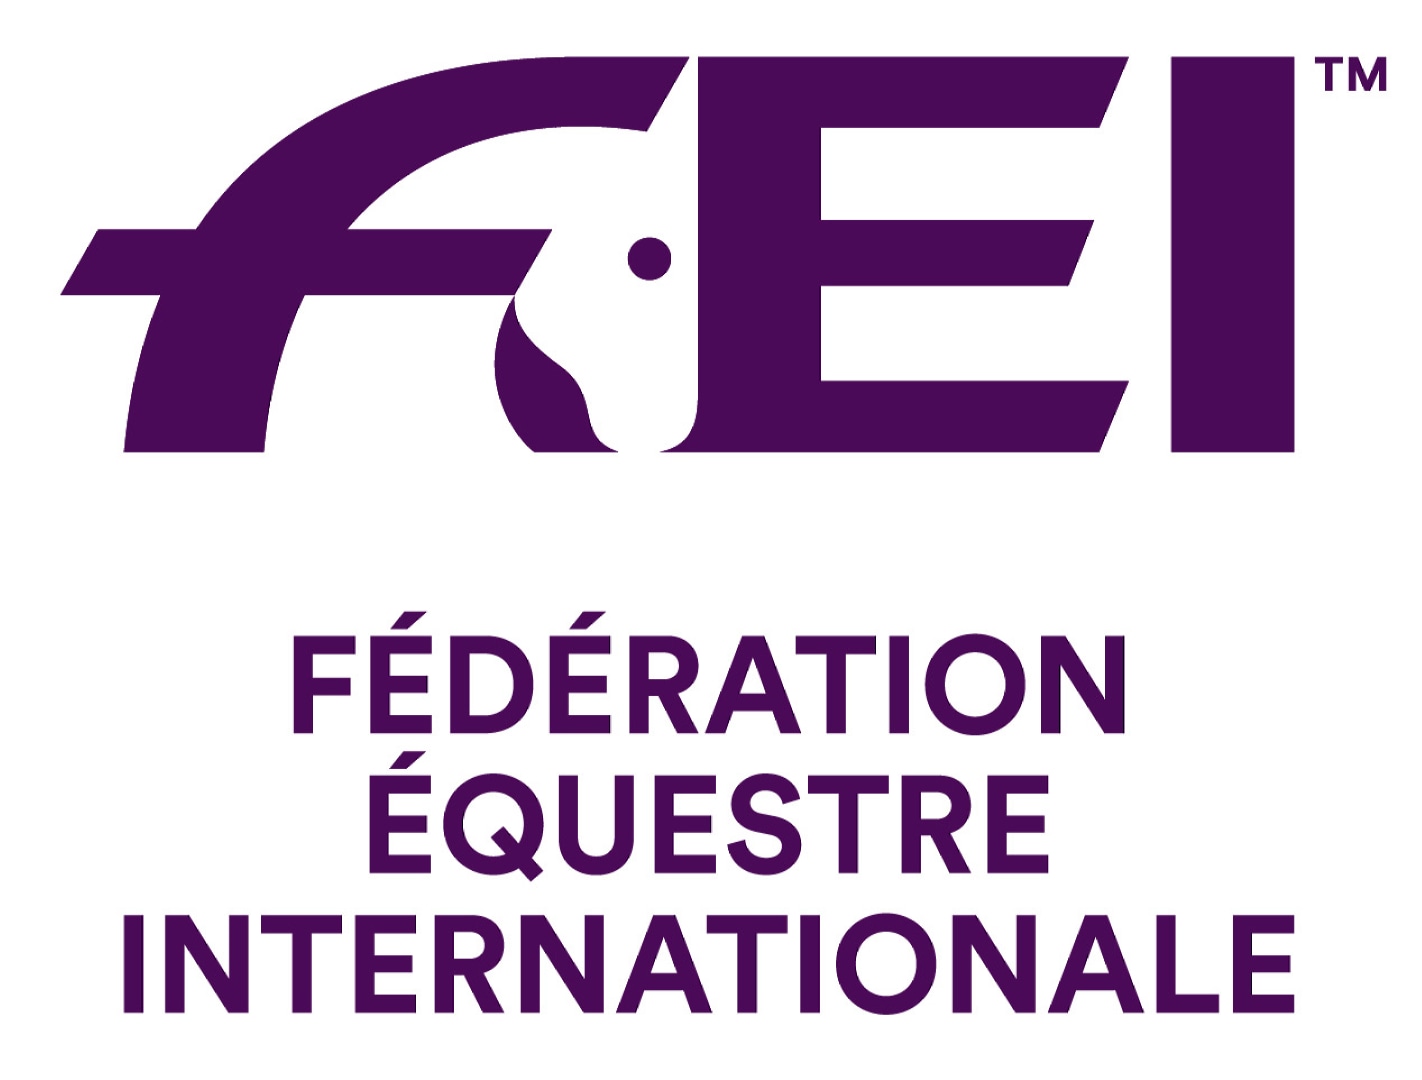 Federation Equestre Internationale